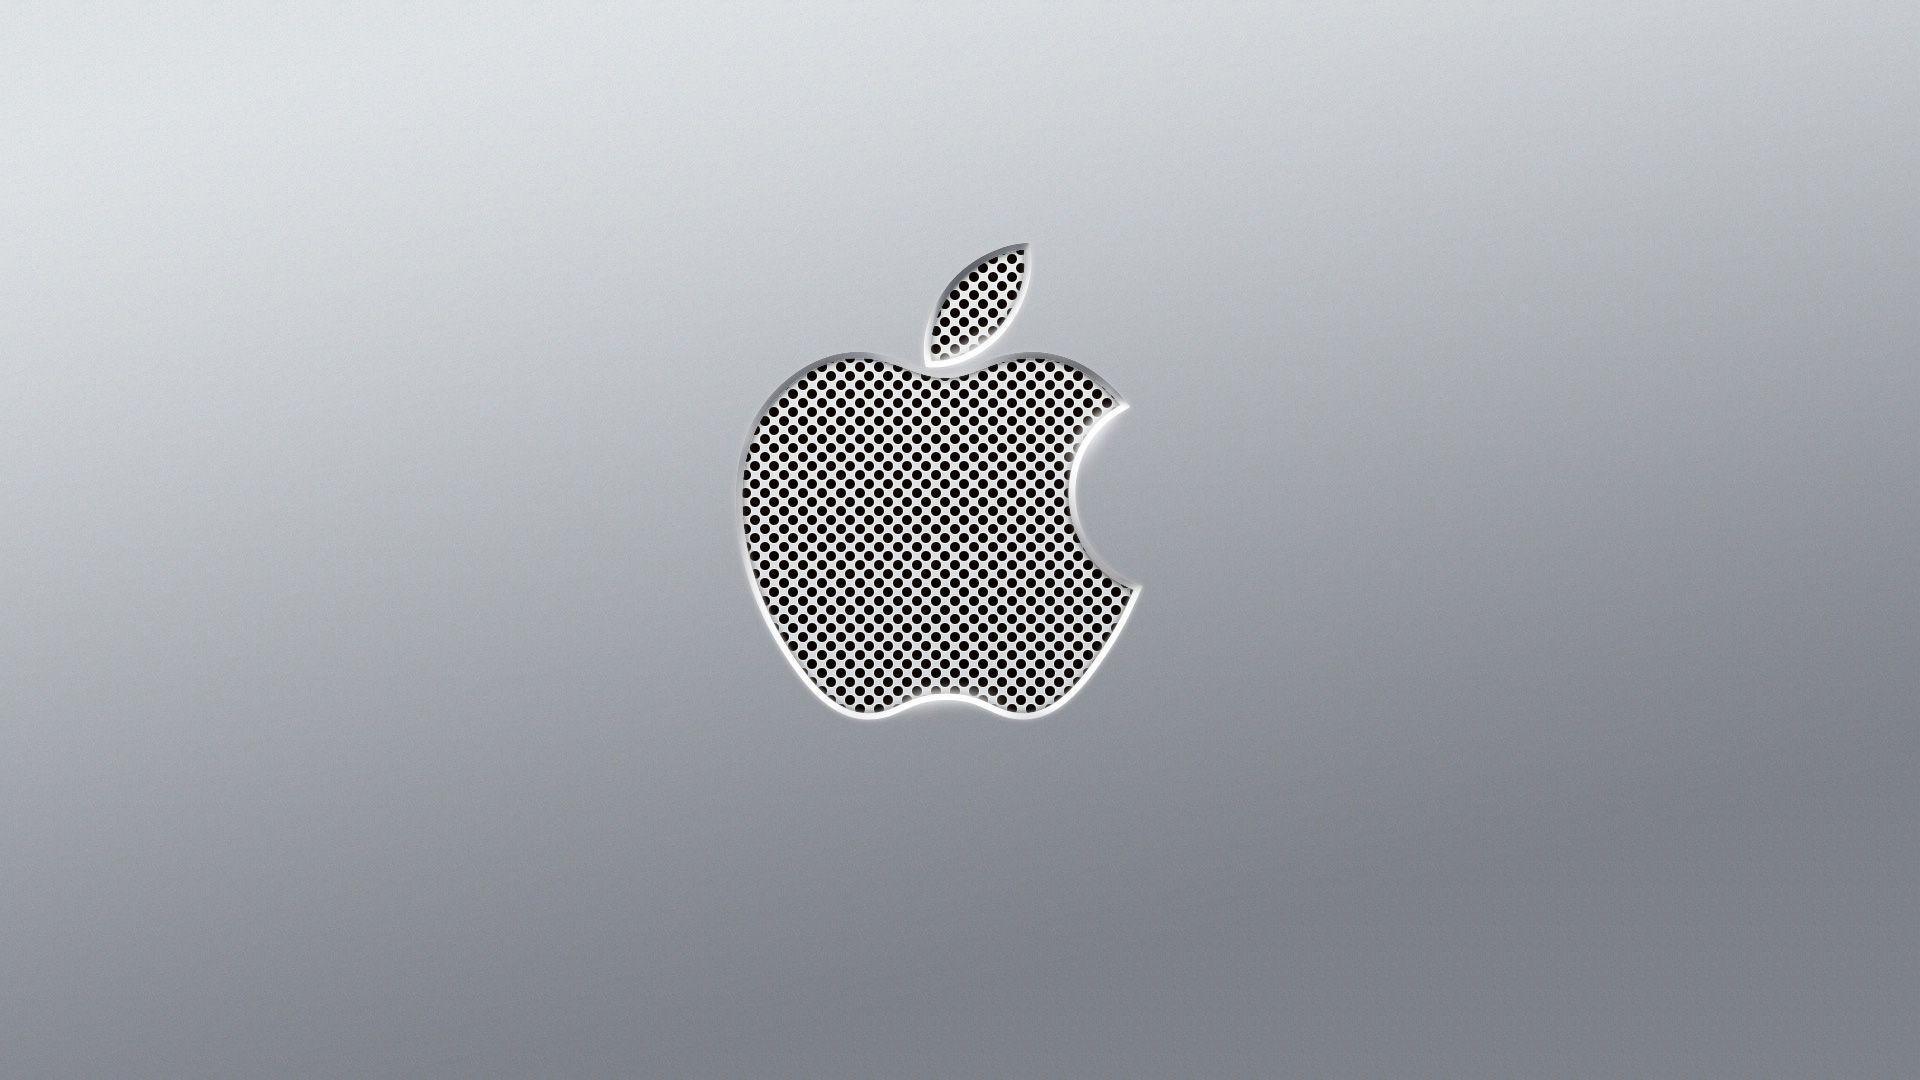 Download wallpaper: apple metal wallpaper, download photo